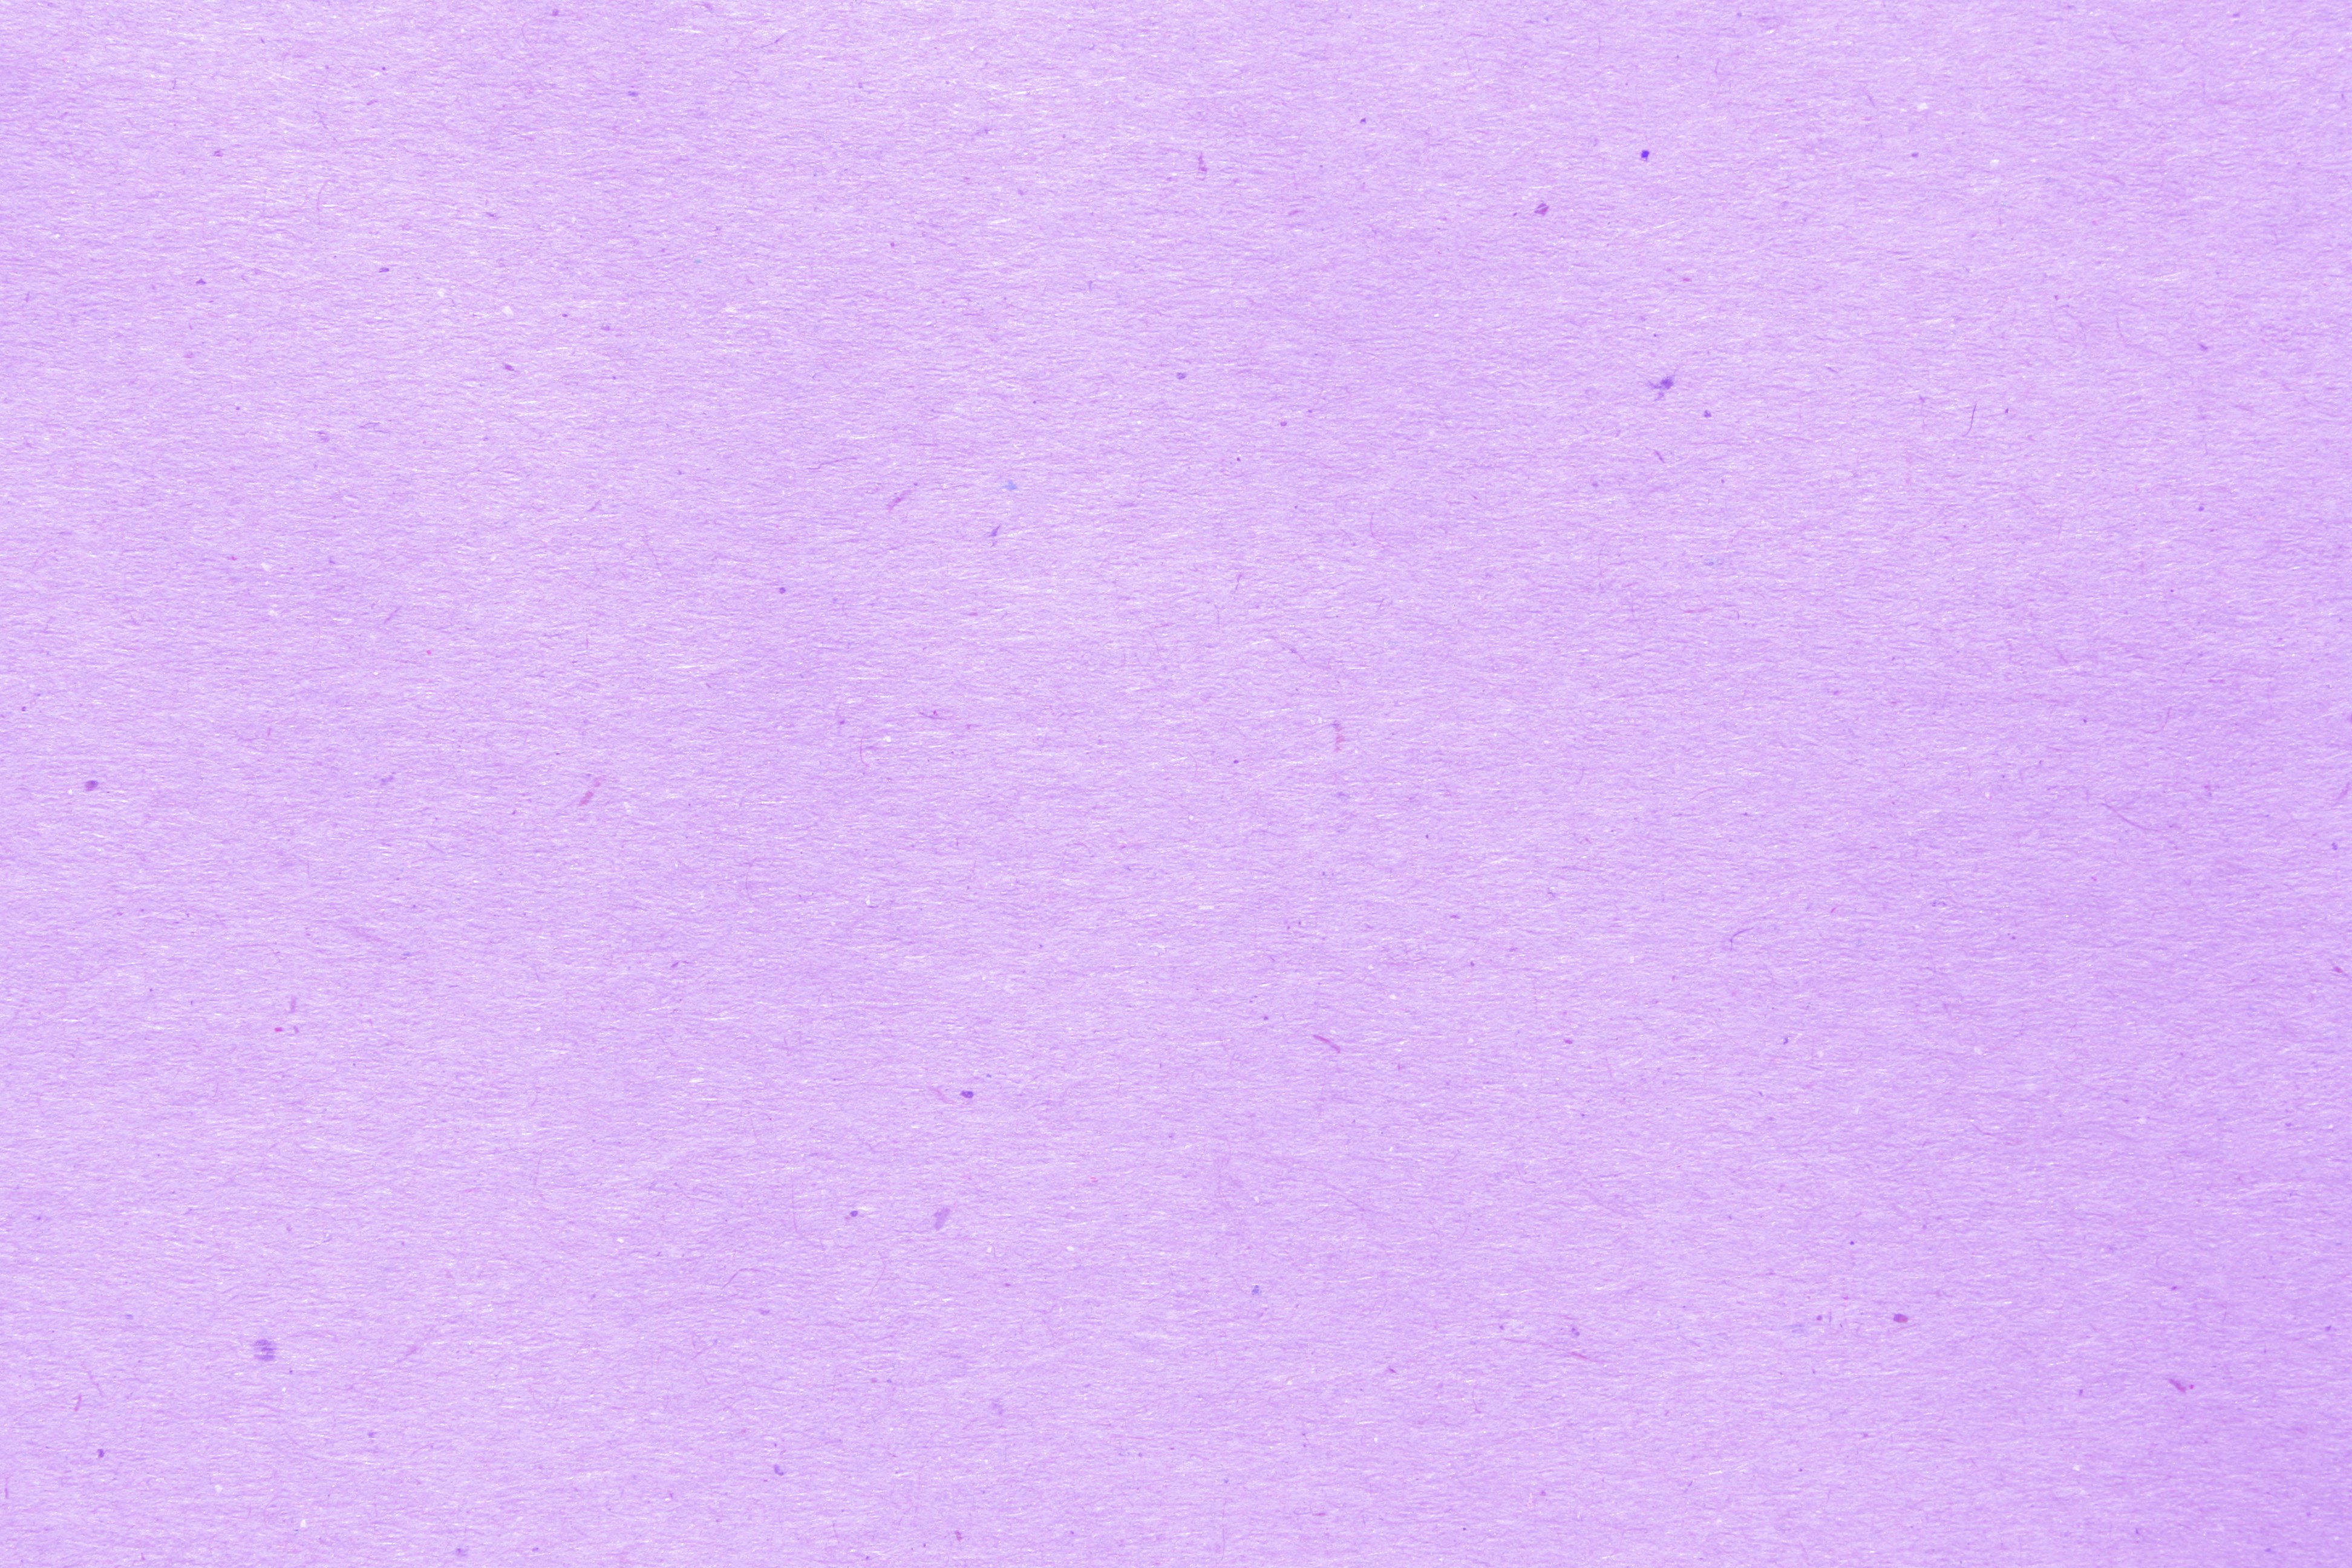 Lavender Purple Paper Texture with Flecks Picture, Free Photograph